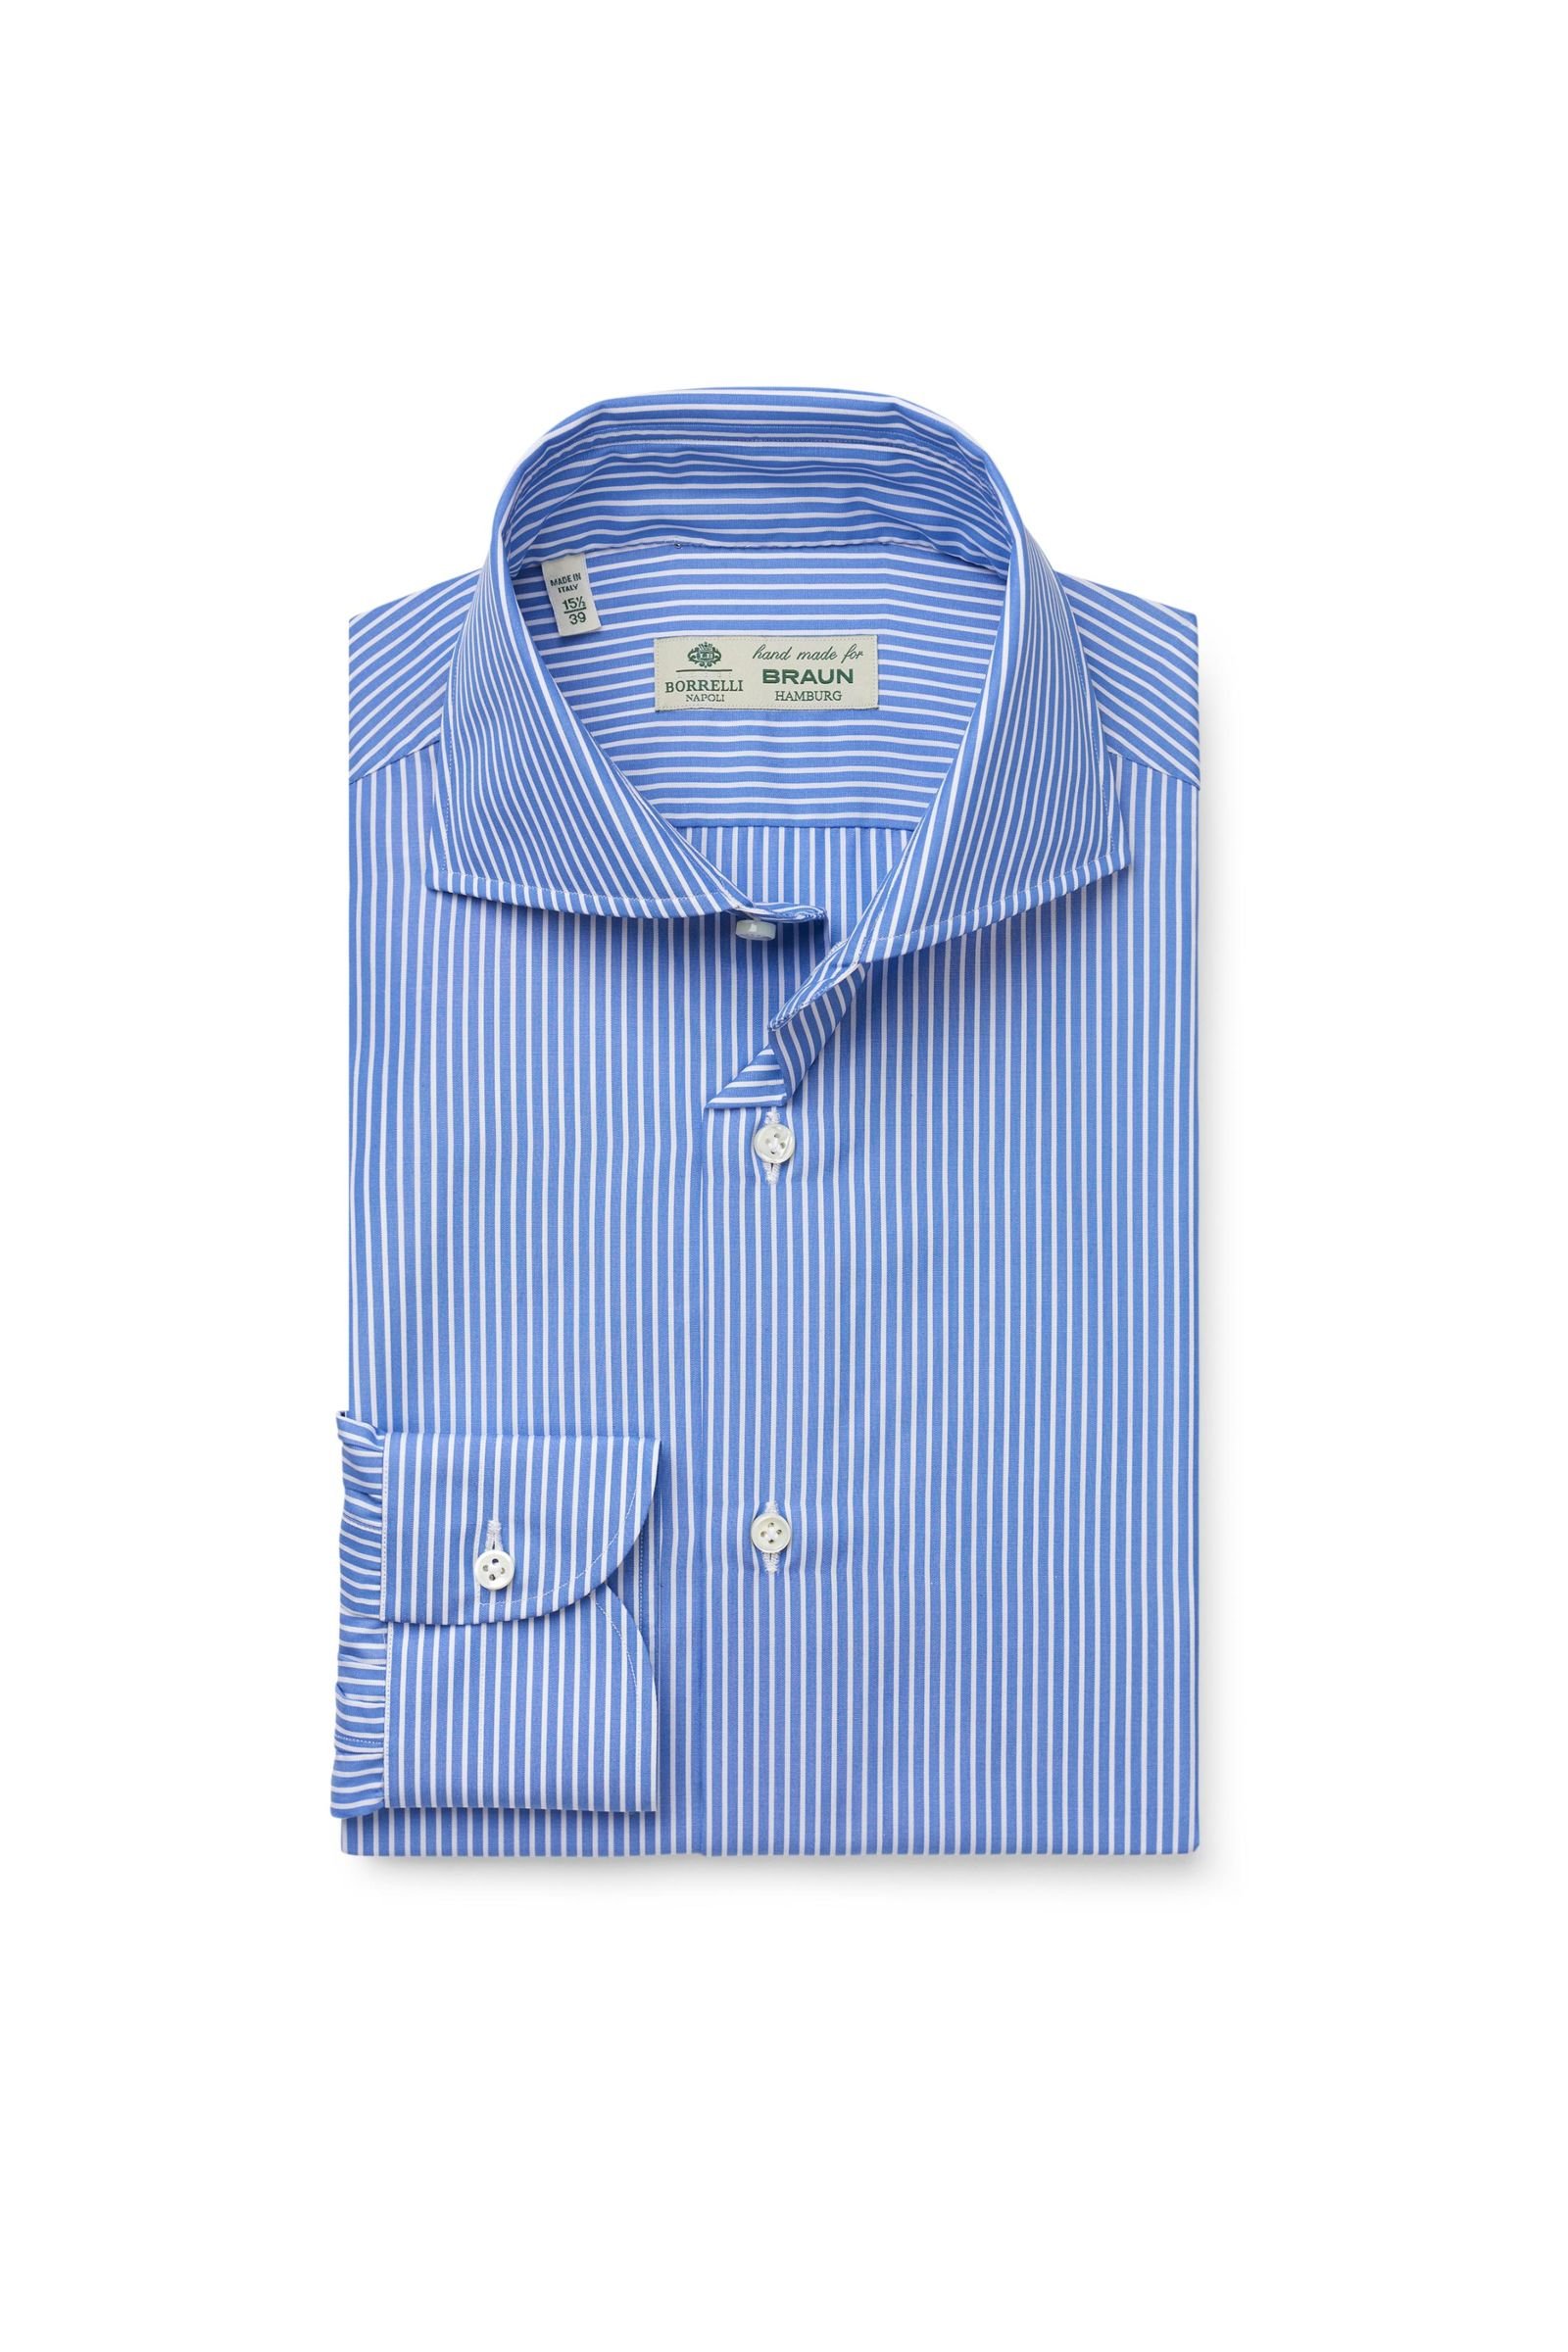 Business shirt 'Nando' shark collar grey-blue/white striped